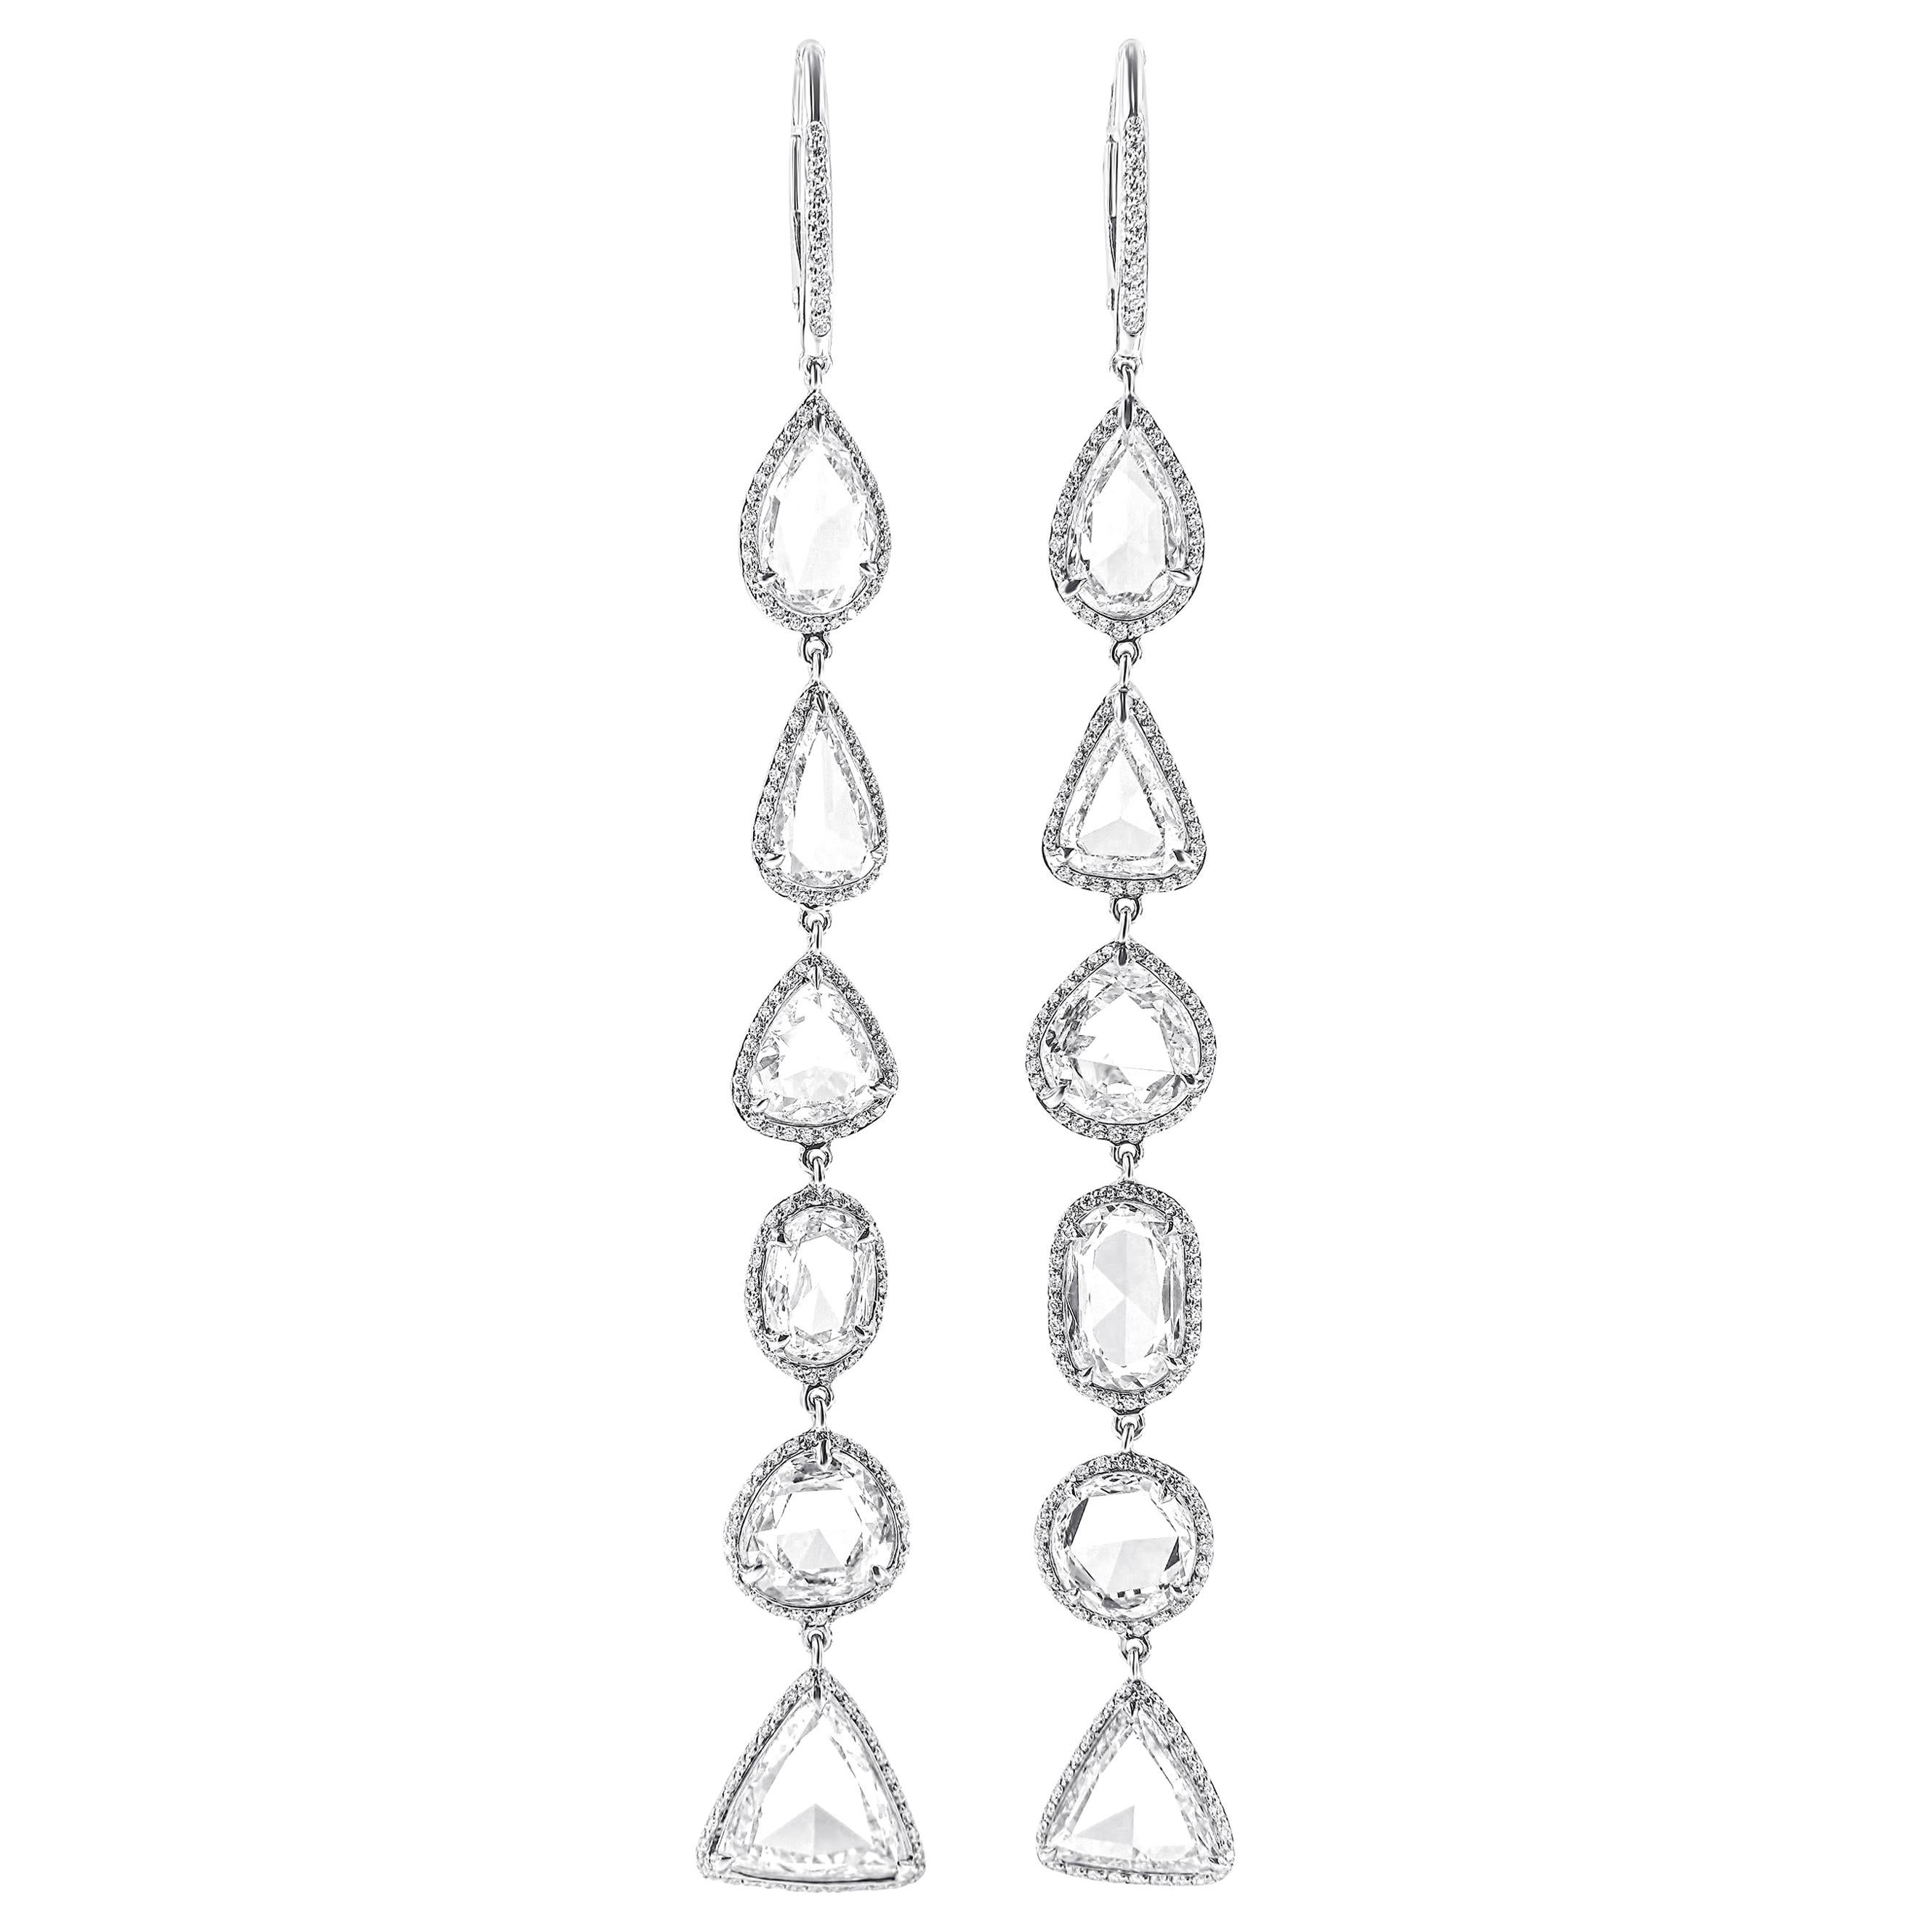 AENEA Jewellery 950 Platinum Rose Cut 14.23 Carat White Diamond Earrings For Sale